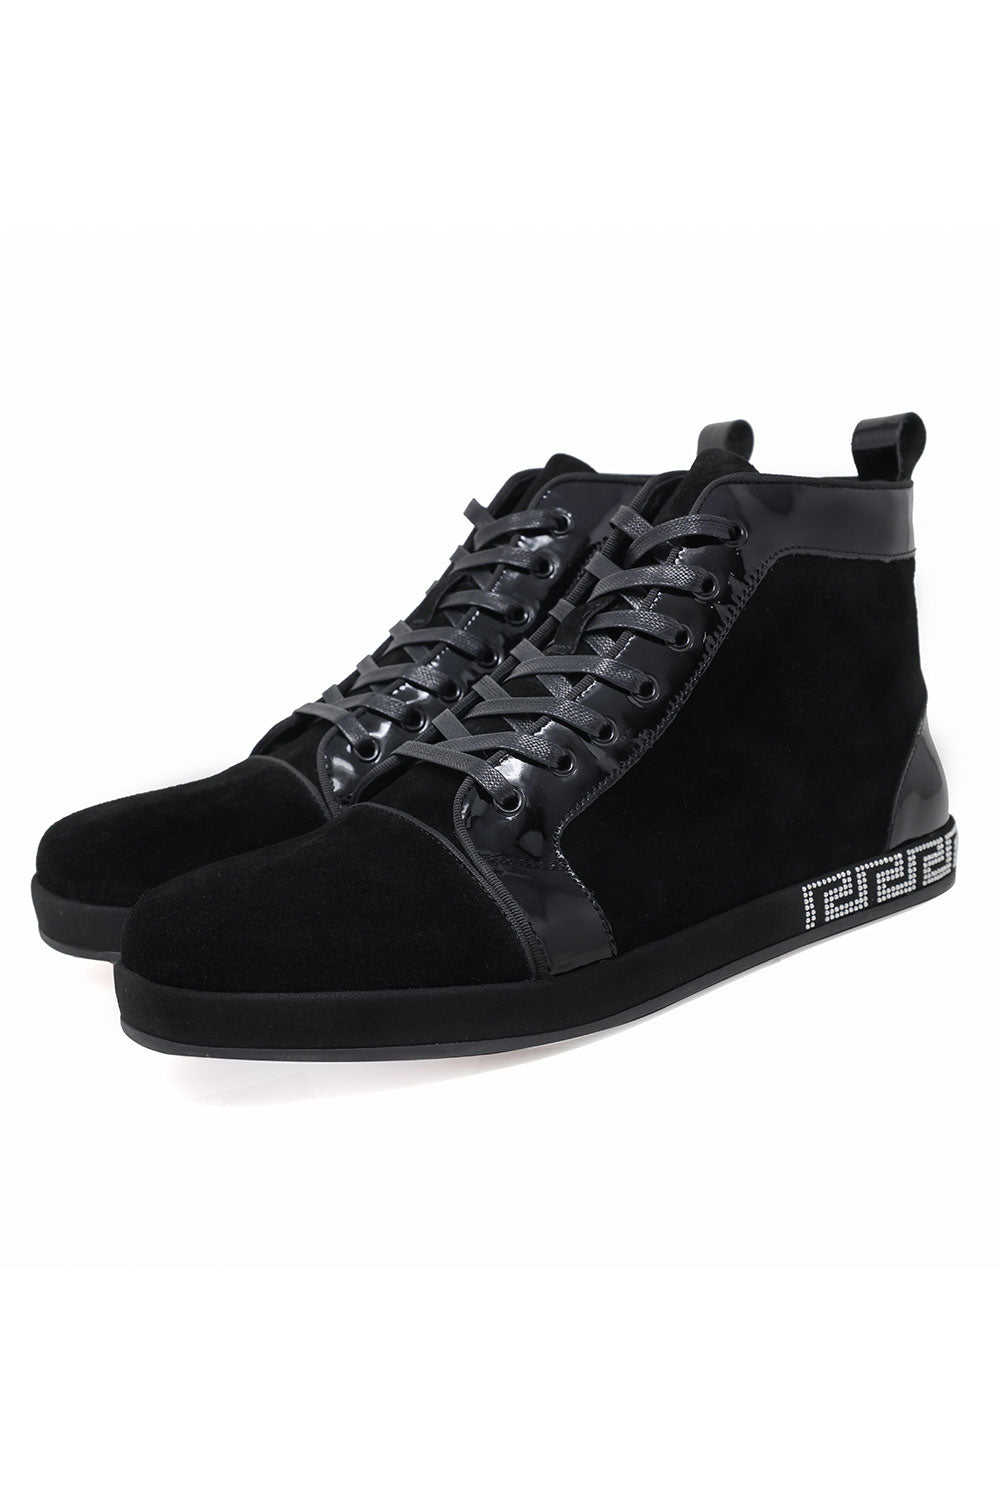 Barabas Men's Rhinestone Grandeur Greek Design High Top Sneakers SH722 Black Silver